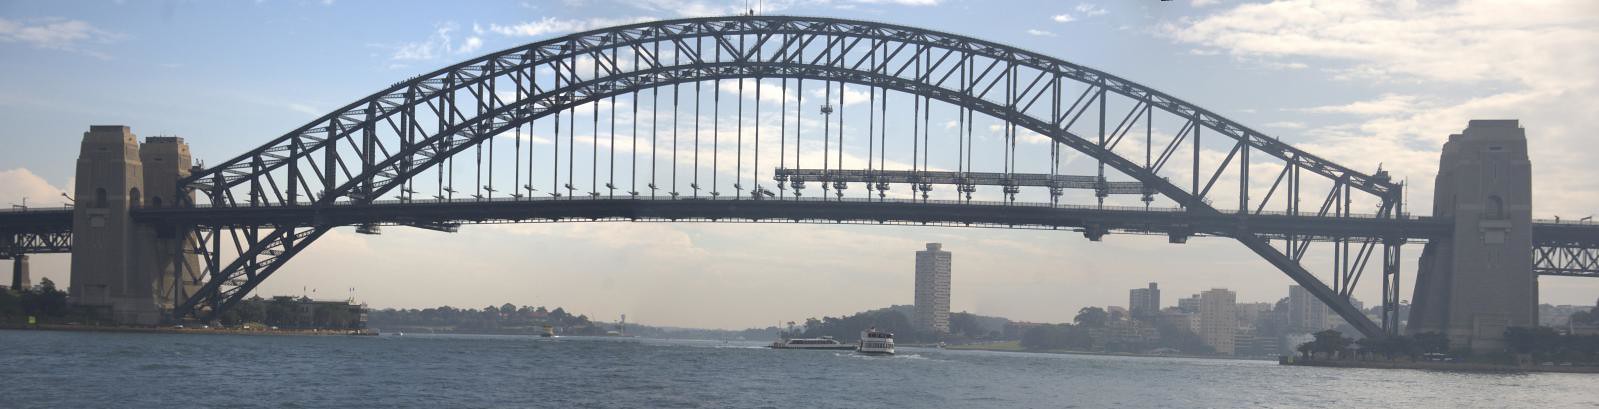 Sydney Harbour Bridge, Sydney